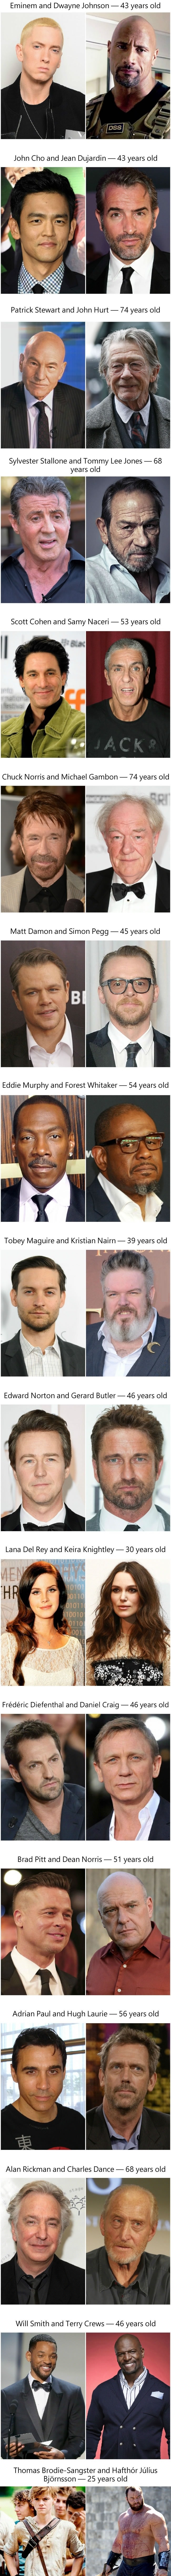 same-age-actors-compilation